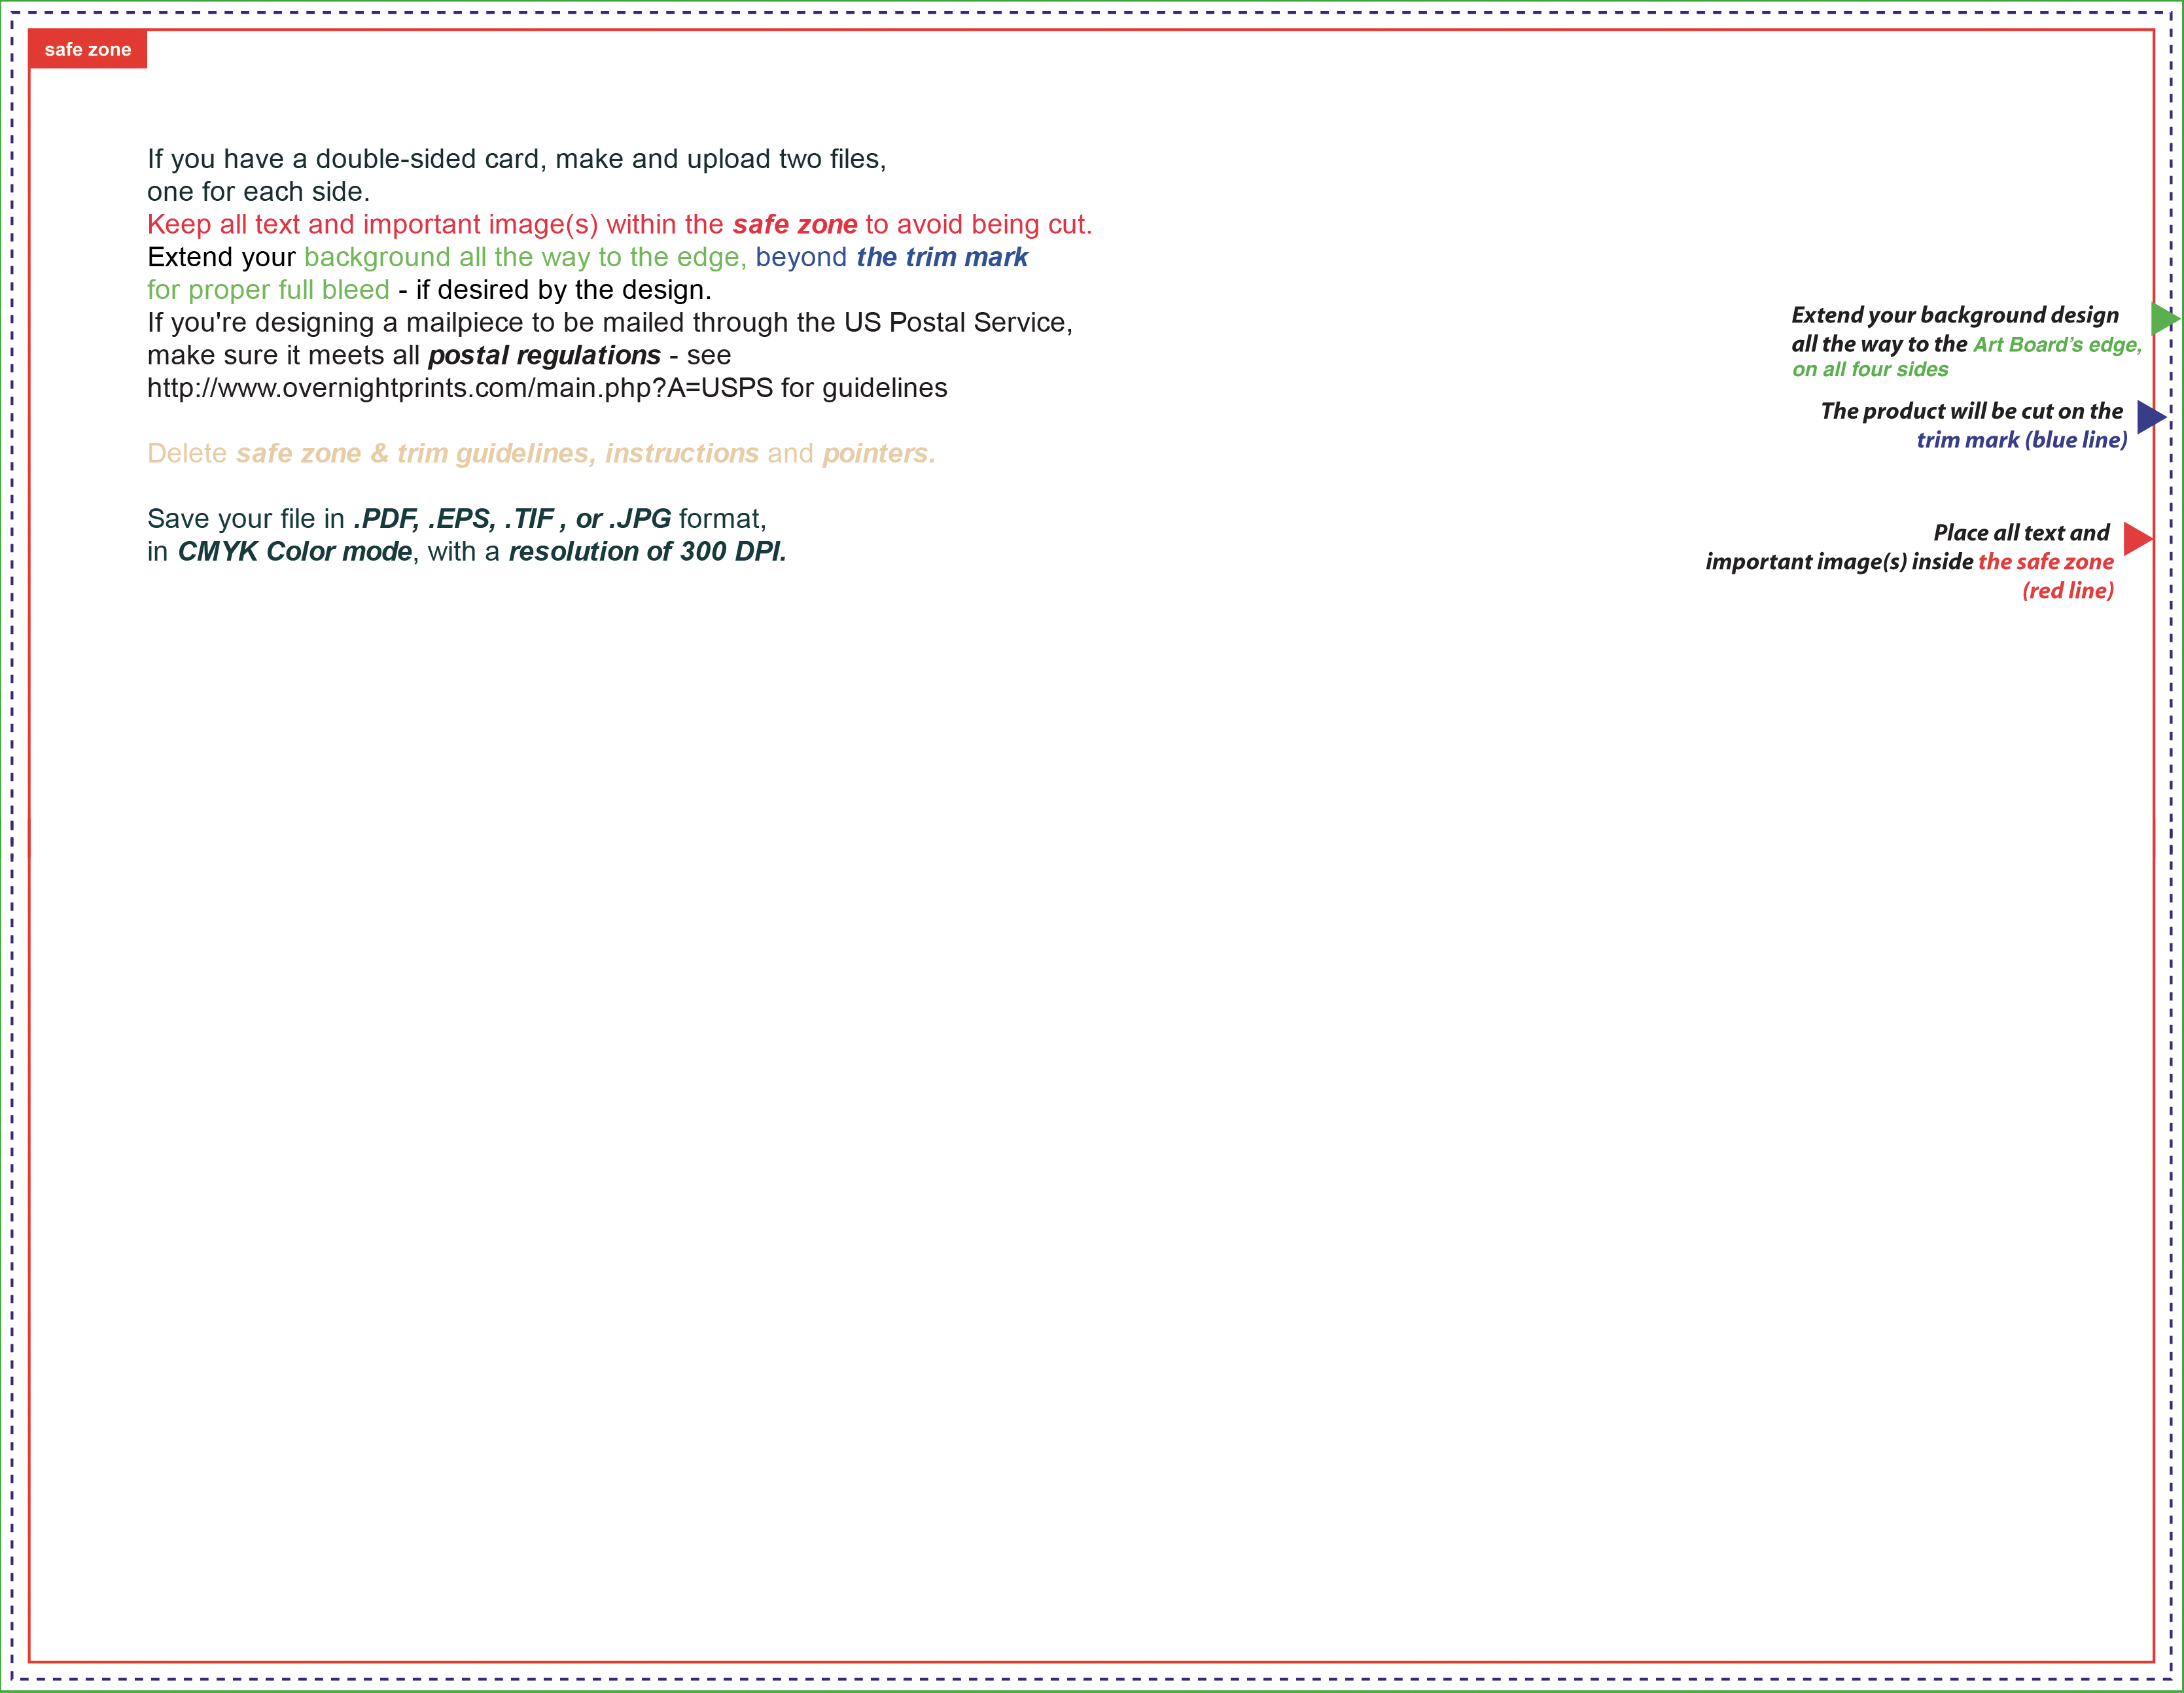 Copyland  Print  Copy  Direct Mail  Design Services  Web Throughout Microsoft Word 4x6 Postcard Template 2